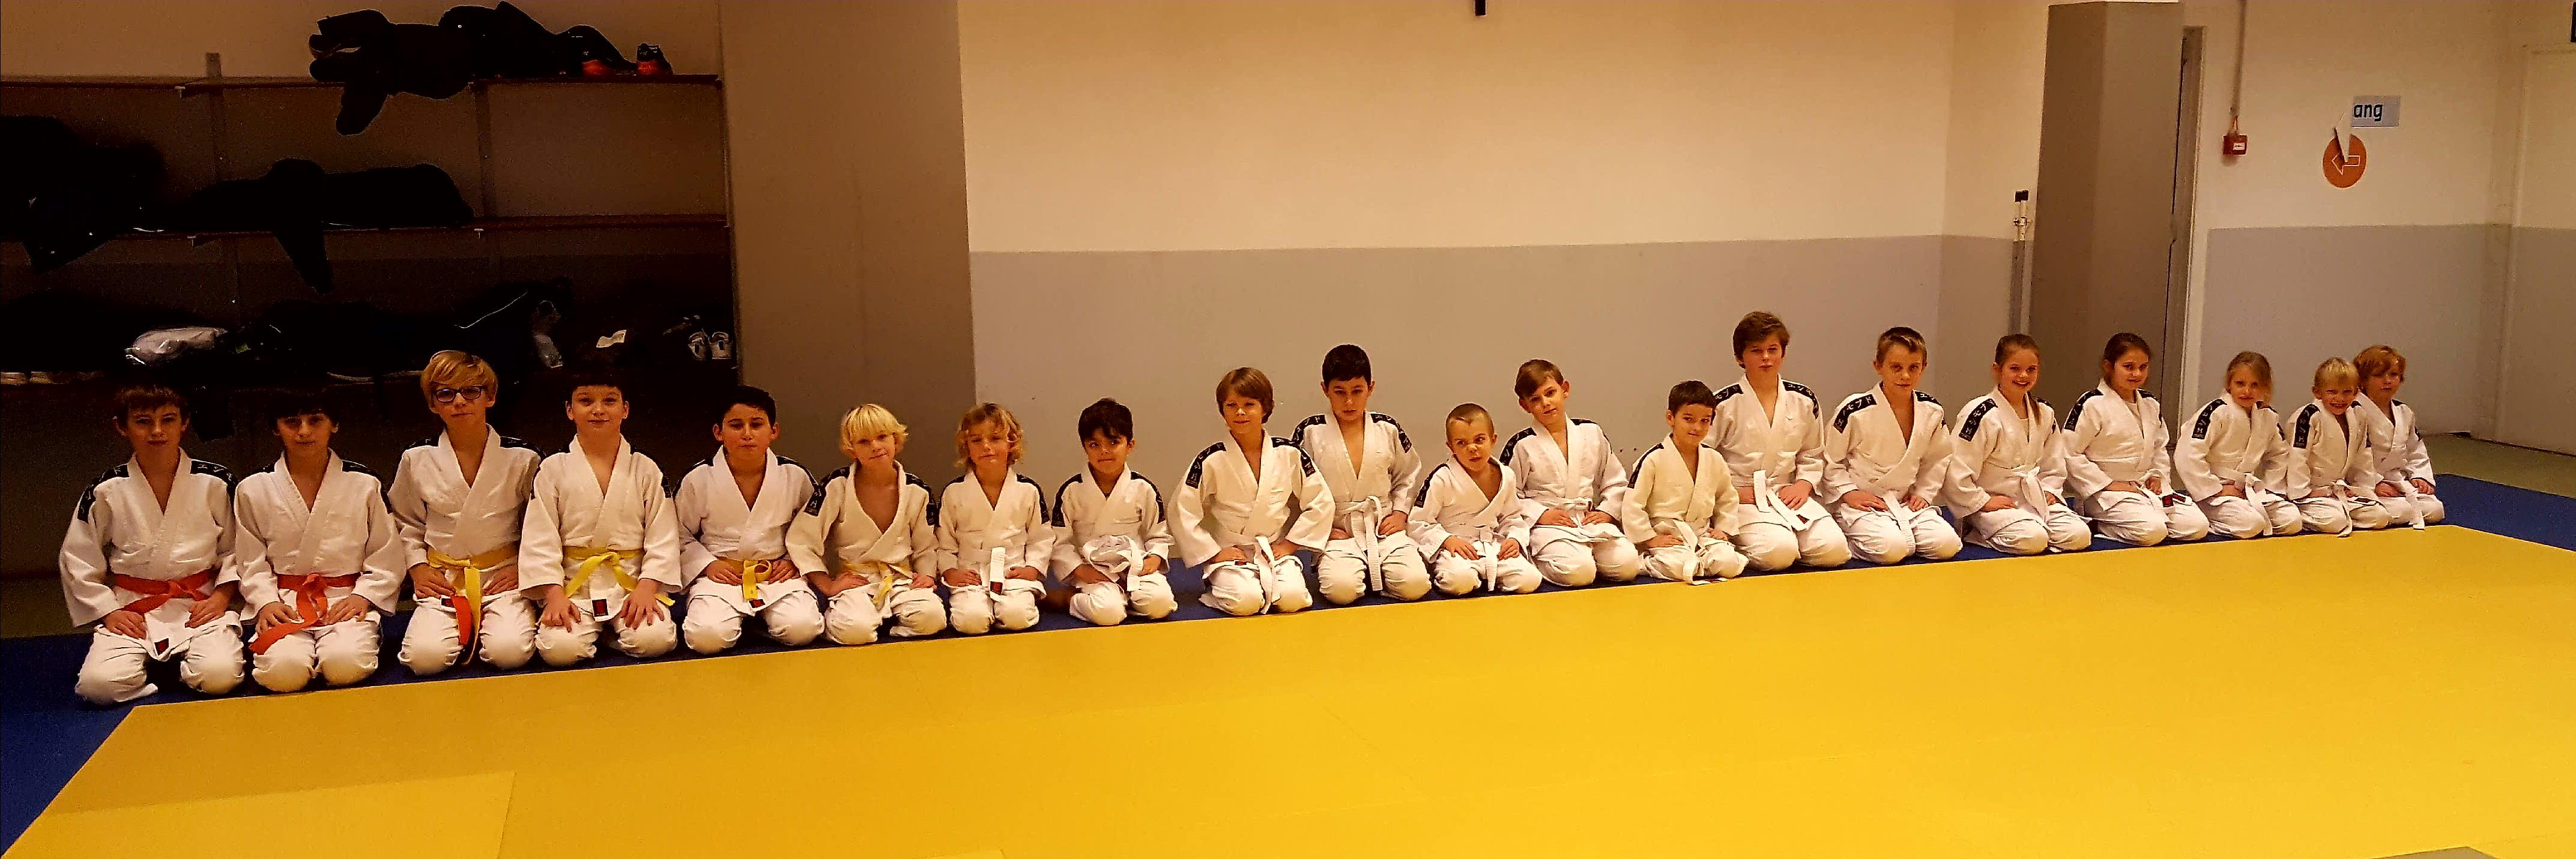 Start judotraining